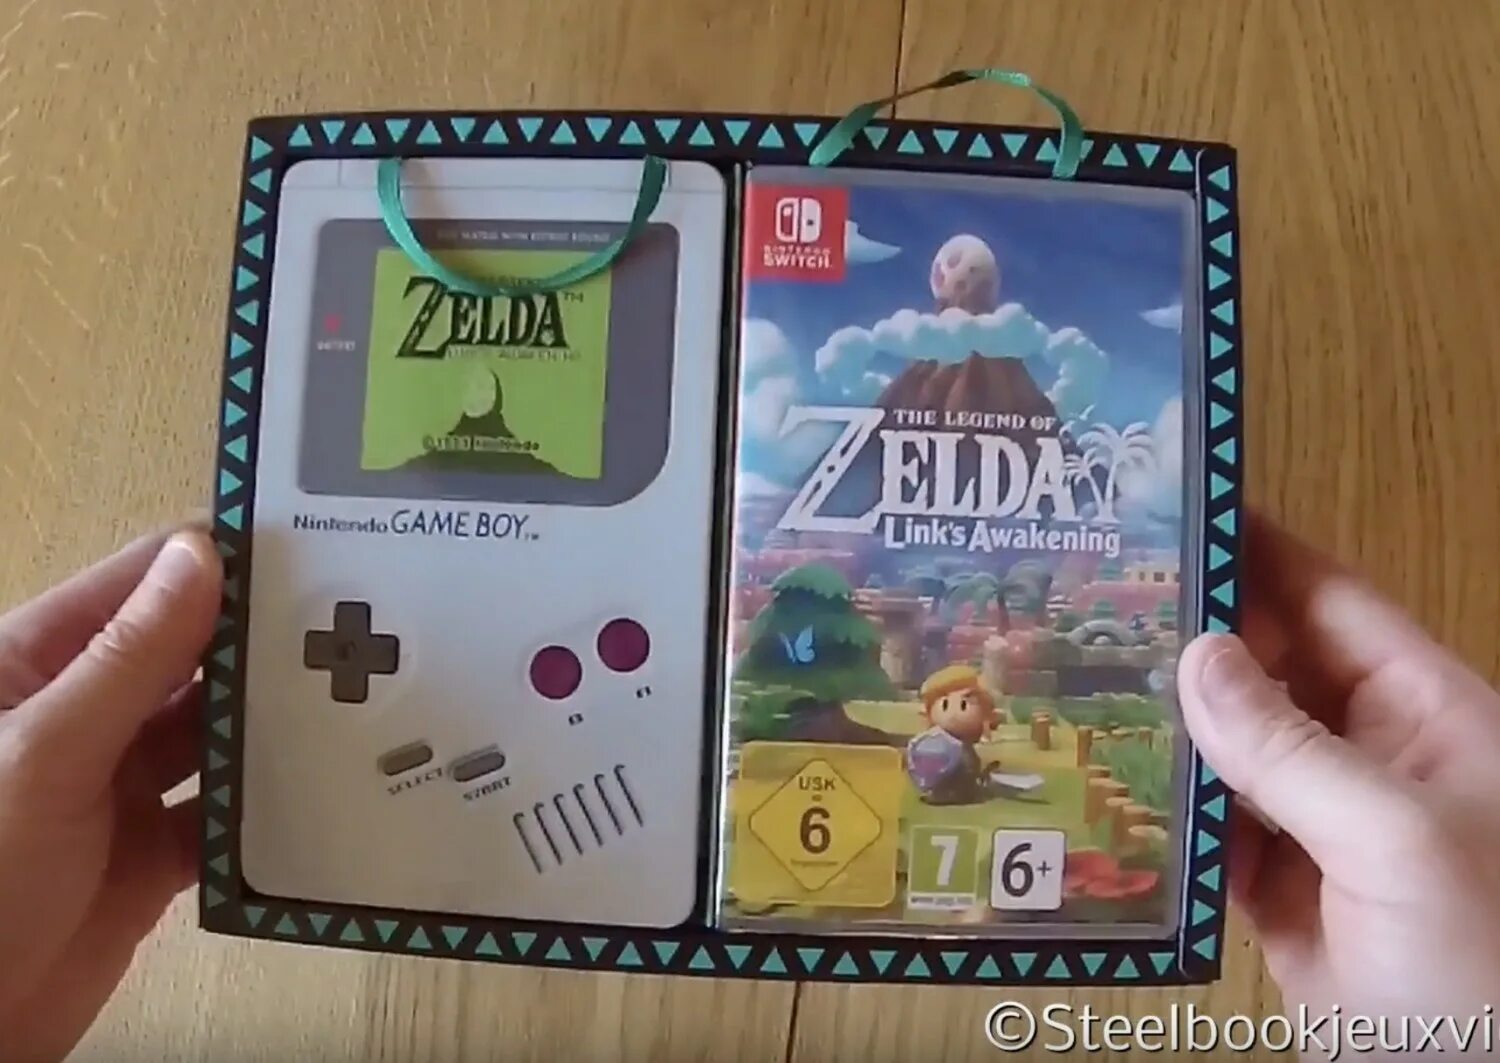 Nintendo link. The Legend of Zelda игра Nintendo. Nintendo Switch Zelda Edition. Zelda link's Awakening Nintendo Switch. Zelda игра на Нинтендо.